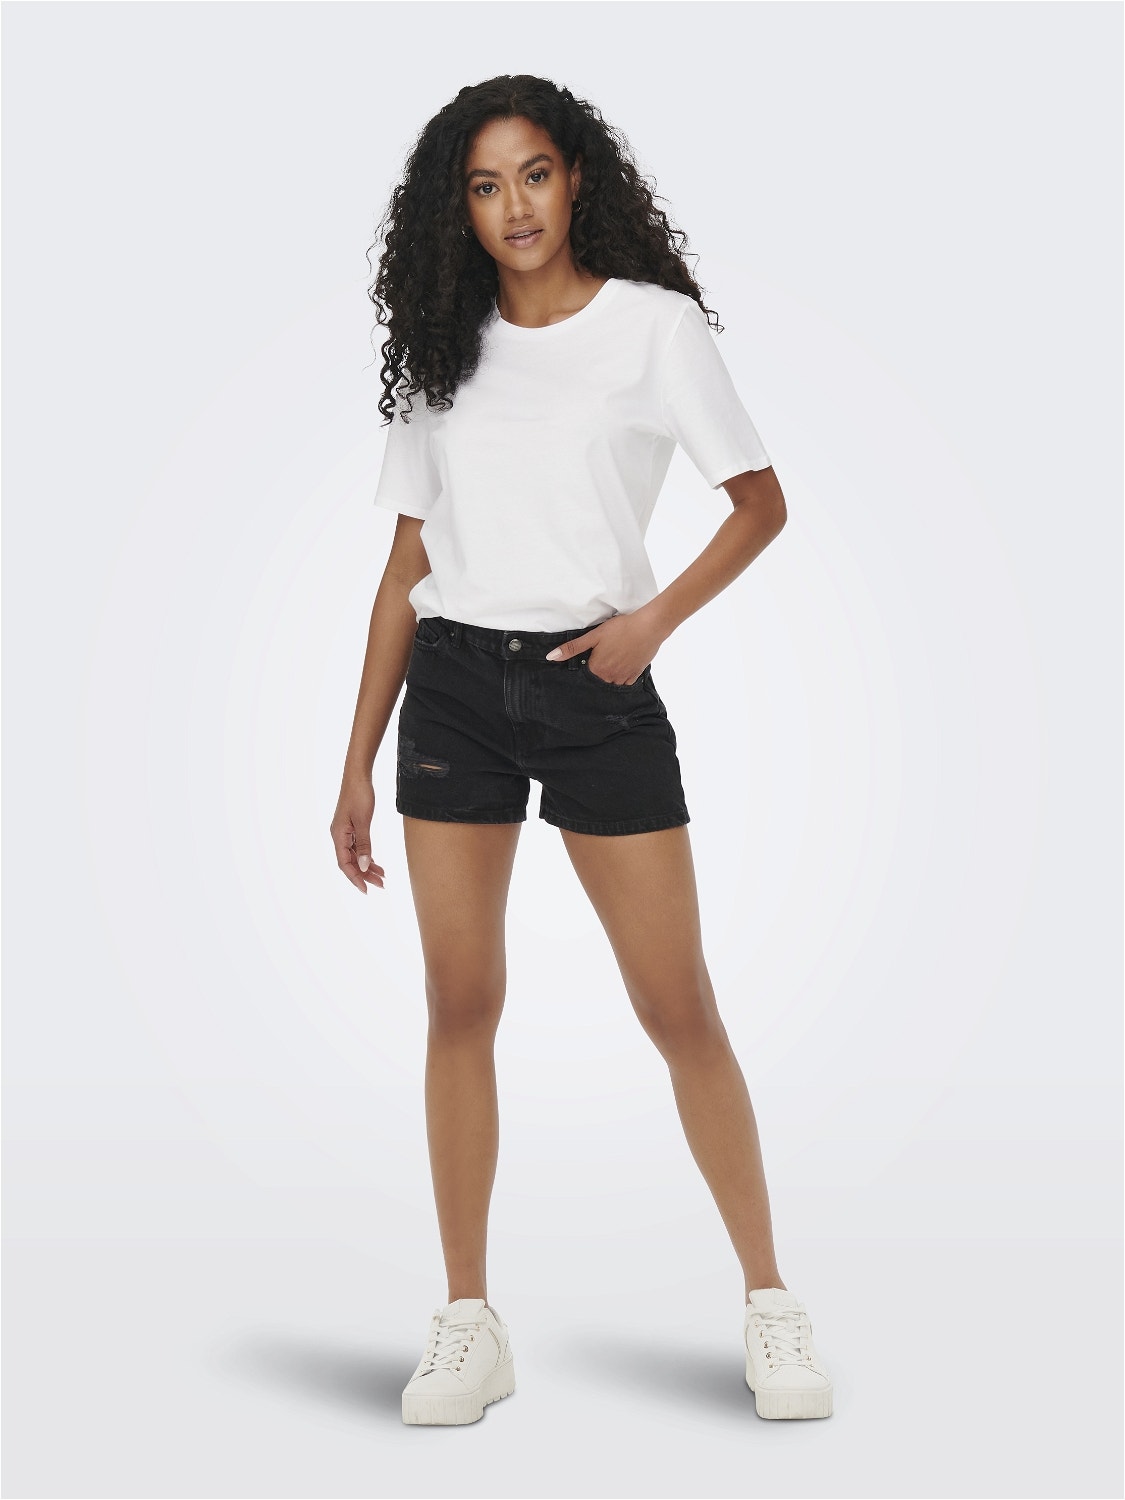 o2fit Womens High Waist Compression Shorts - Black/White